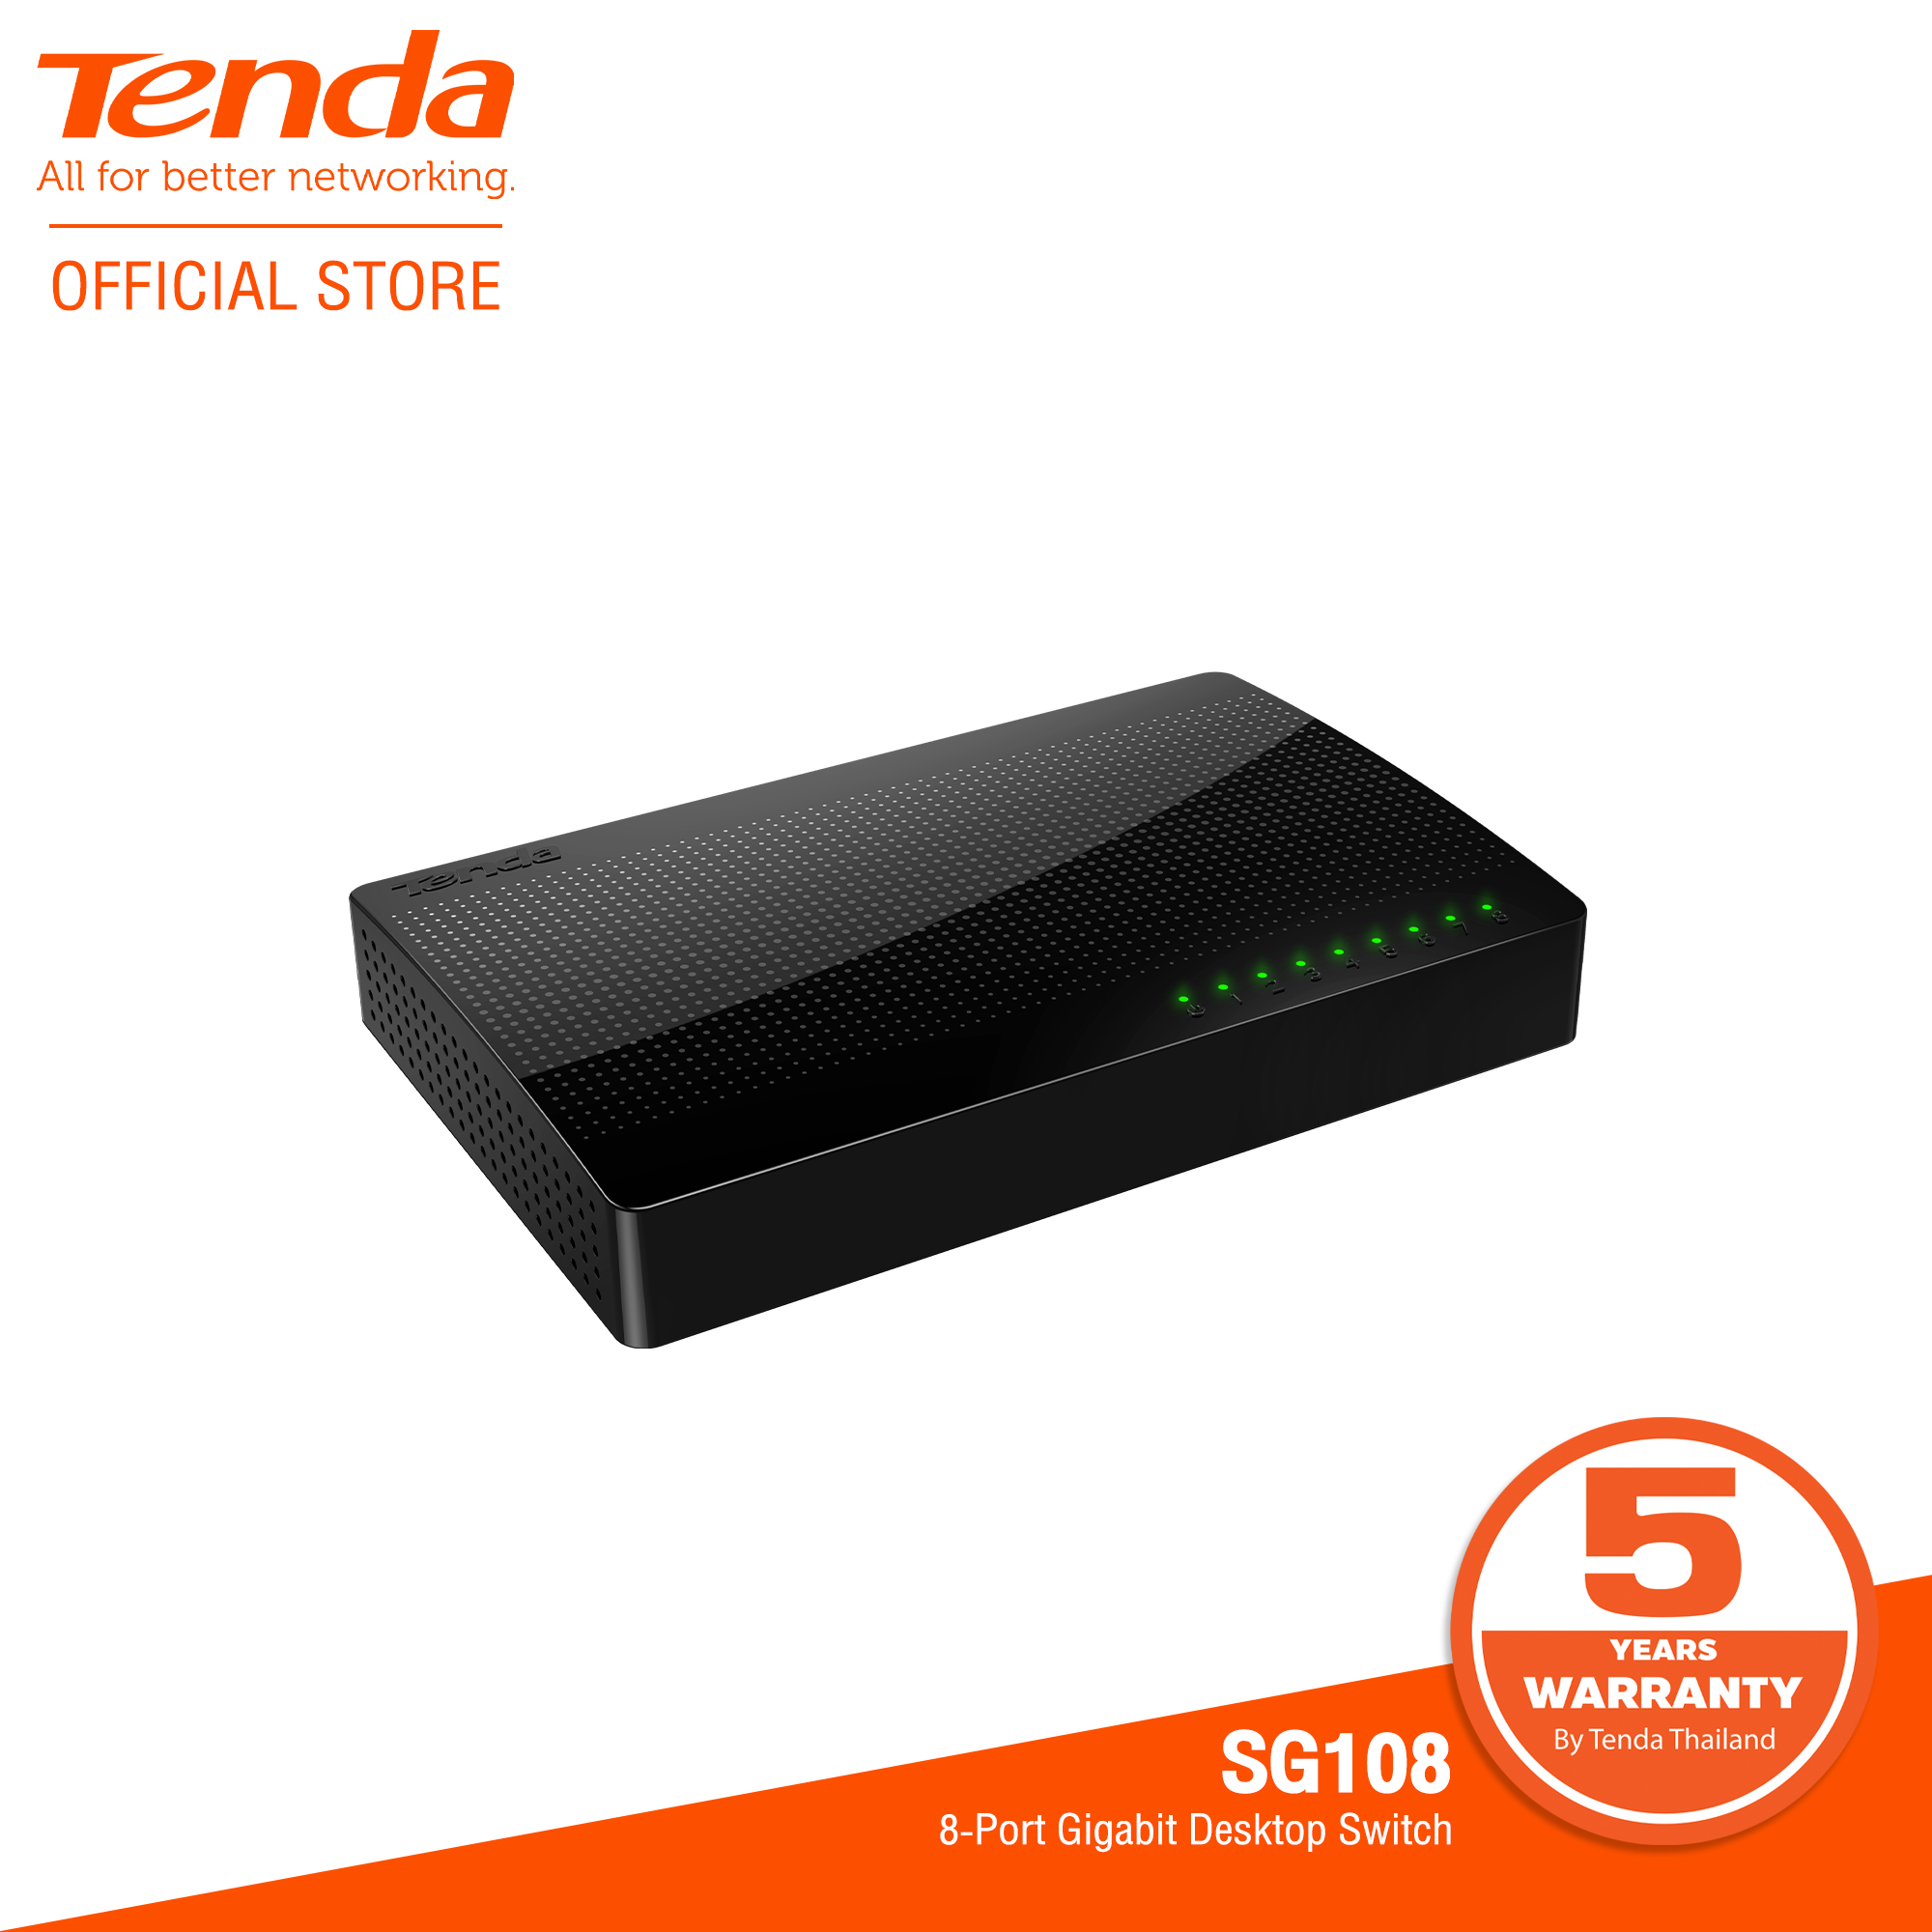 Tenda SG108 (ราคาถูก/คุณภาพสูง) Gigabit Switch 10/100/100 ตัวเล็ก กระทัดรัด เปิดได้ต่อเนื่อง ทนทาน รับประกันศูนย์ Tenda Thailand 5 ปี